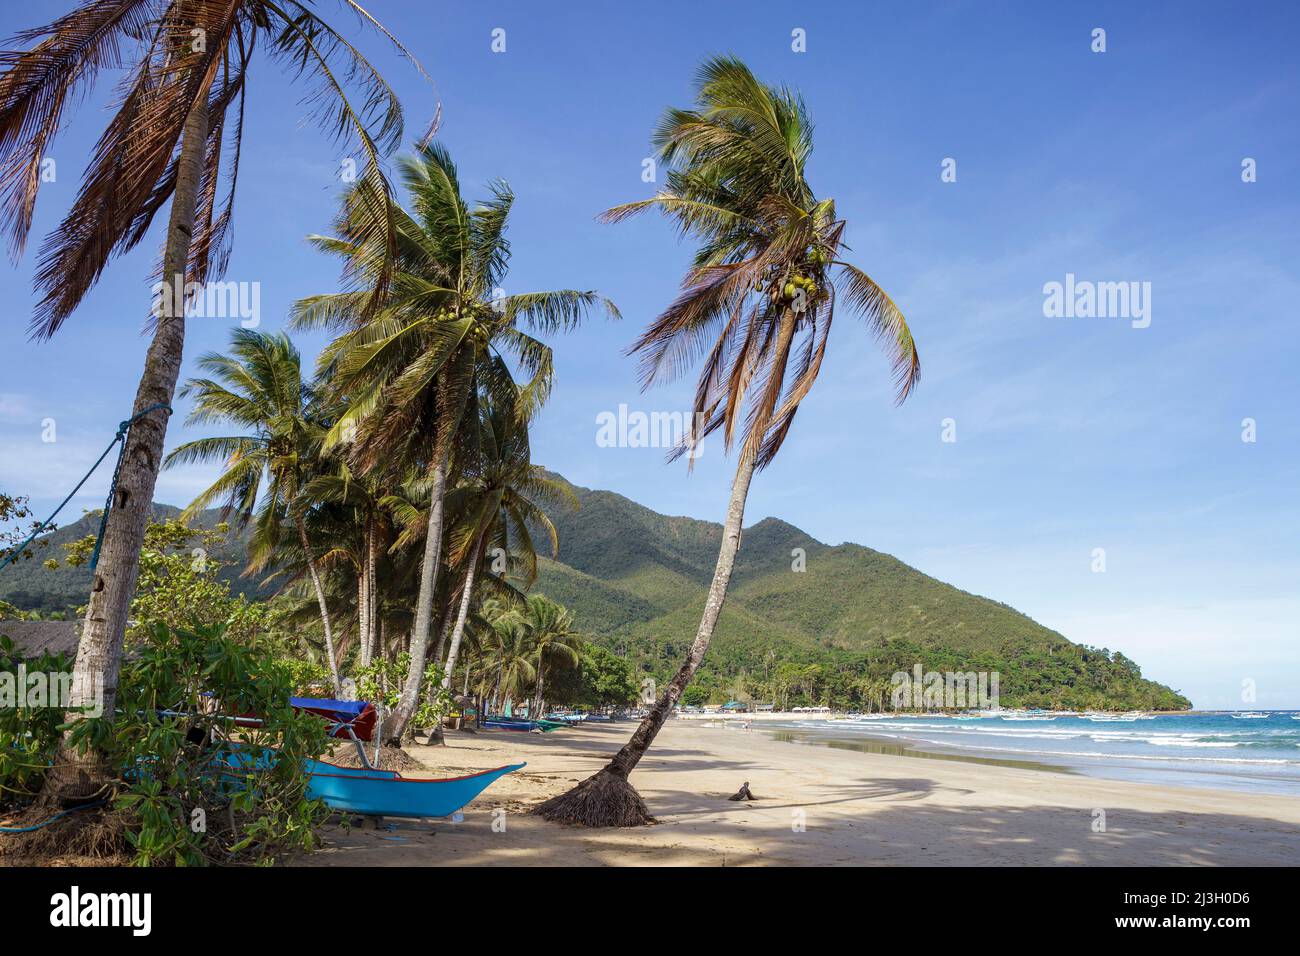 Philippinen, Palawan, Sabang Beach, Angeln Outrigger Kanus, Sandstrand und Kokospalmen Stockfoto